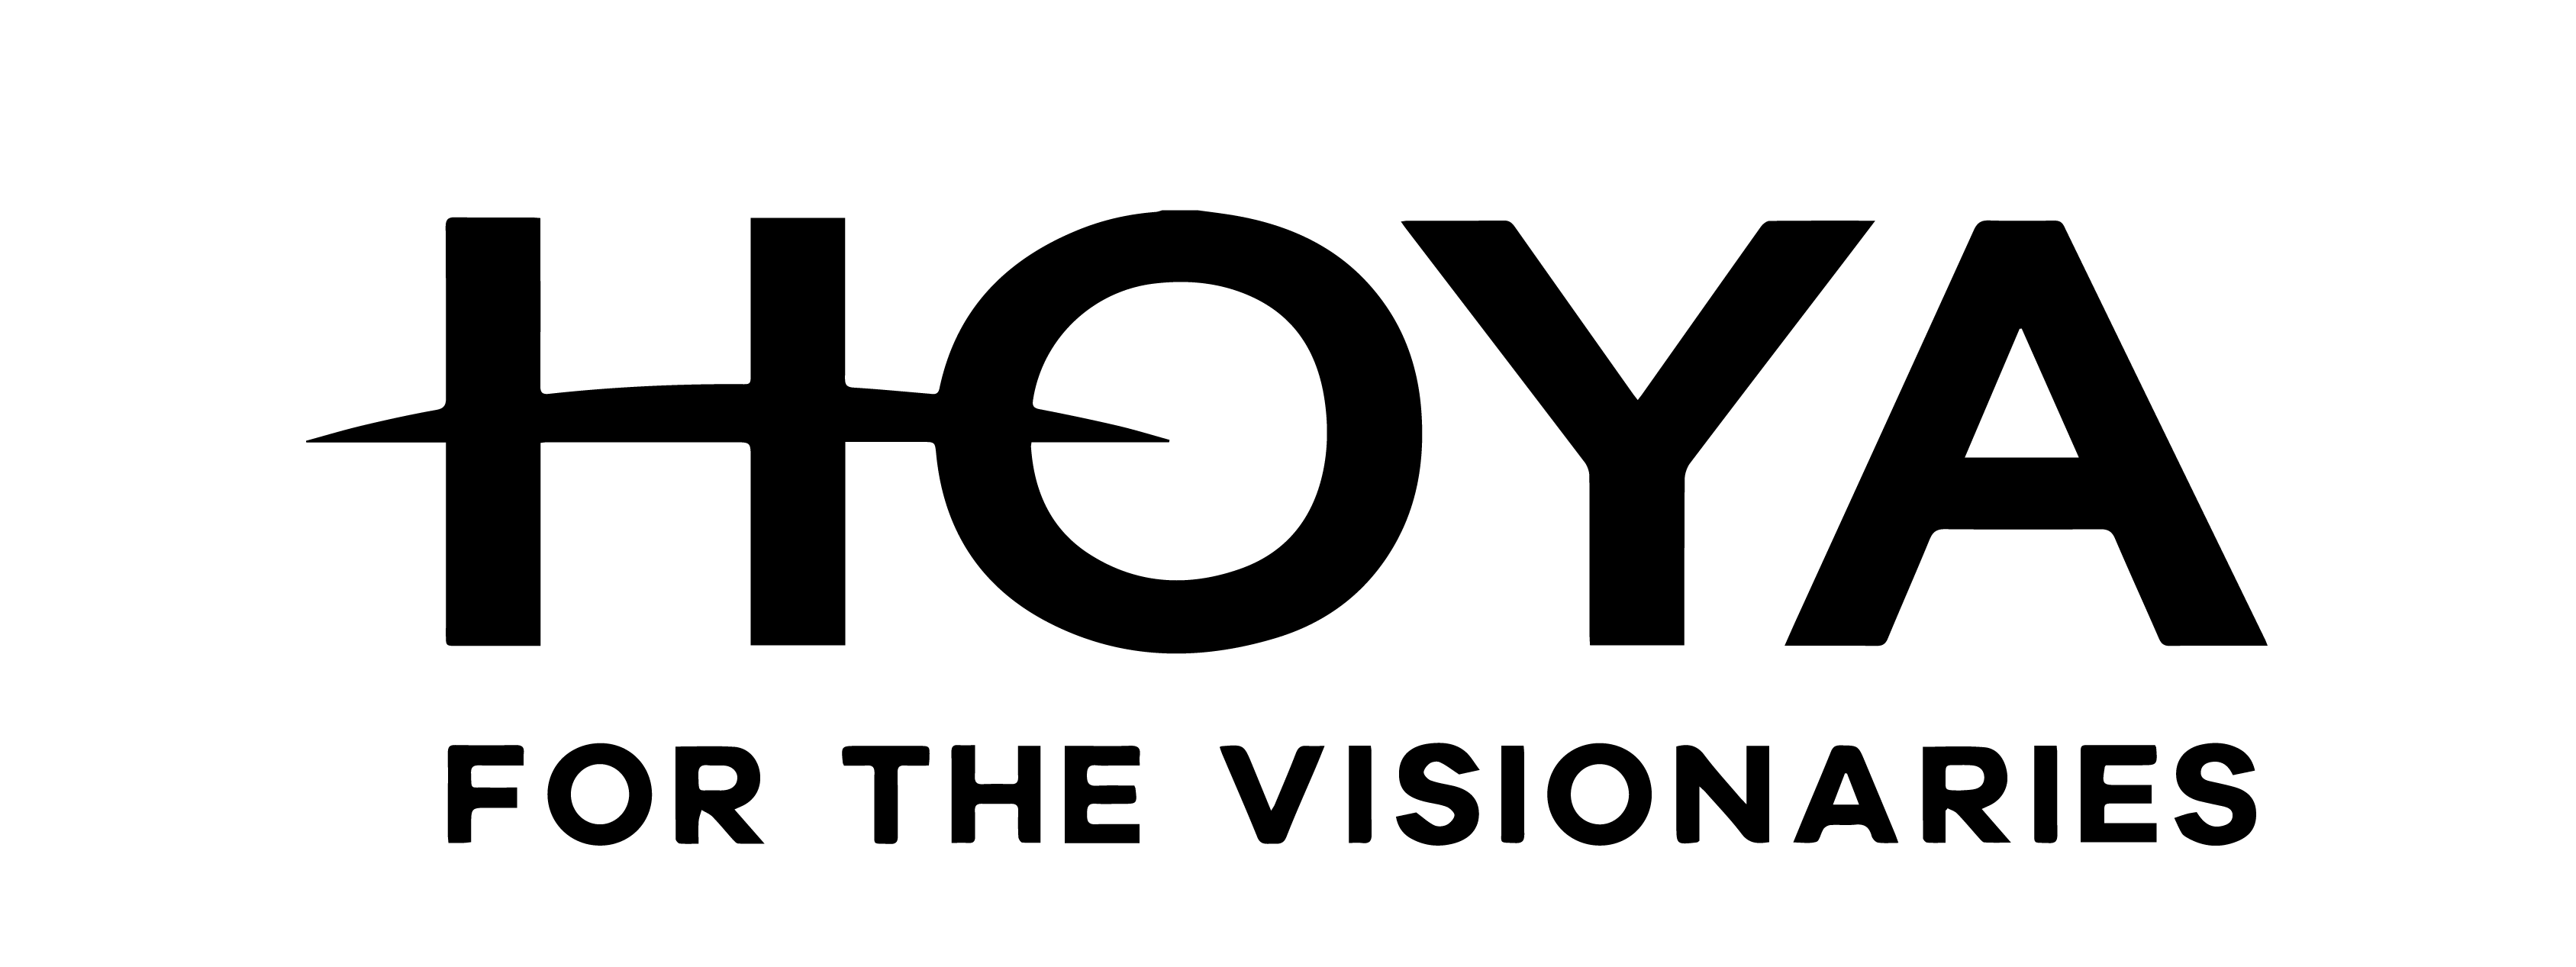 Logo Hoya for the Visionaries